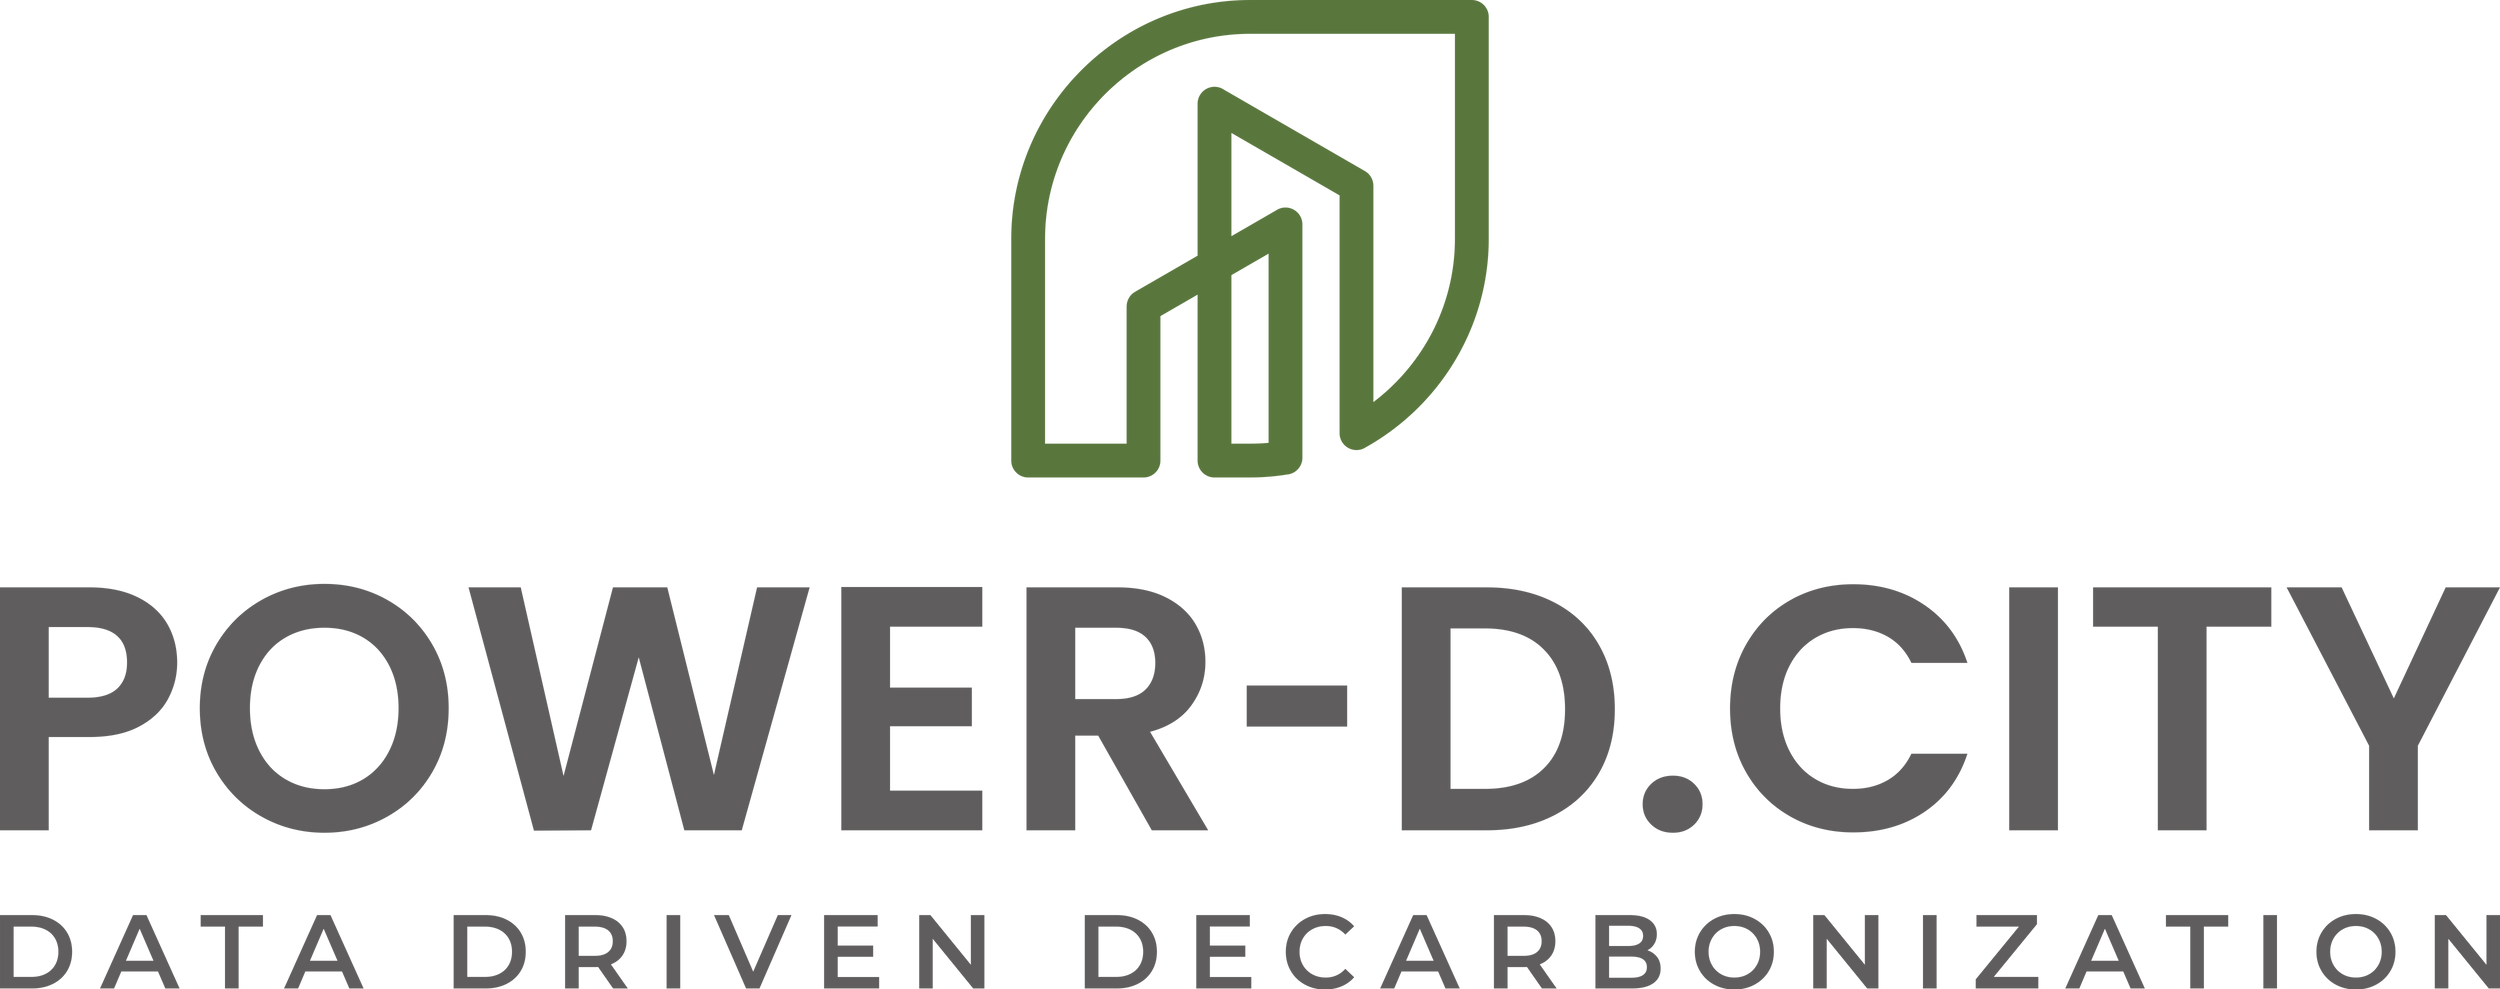 Power-d City logo